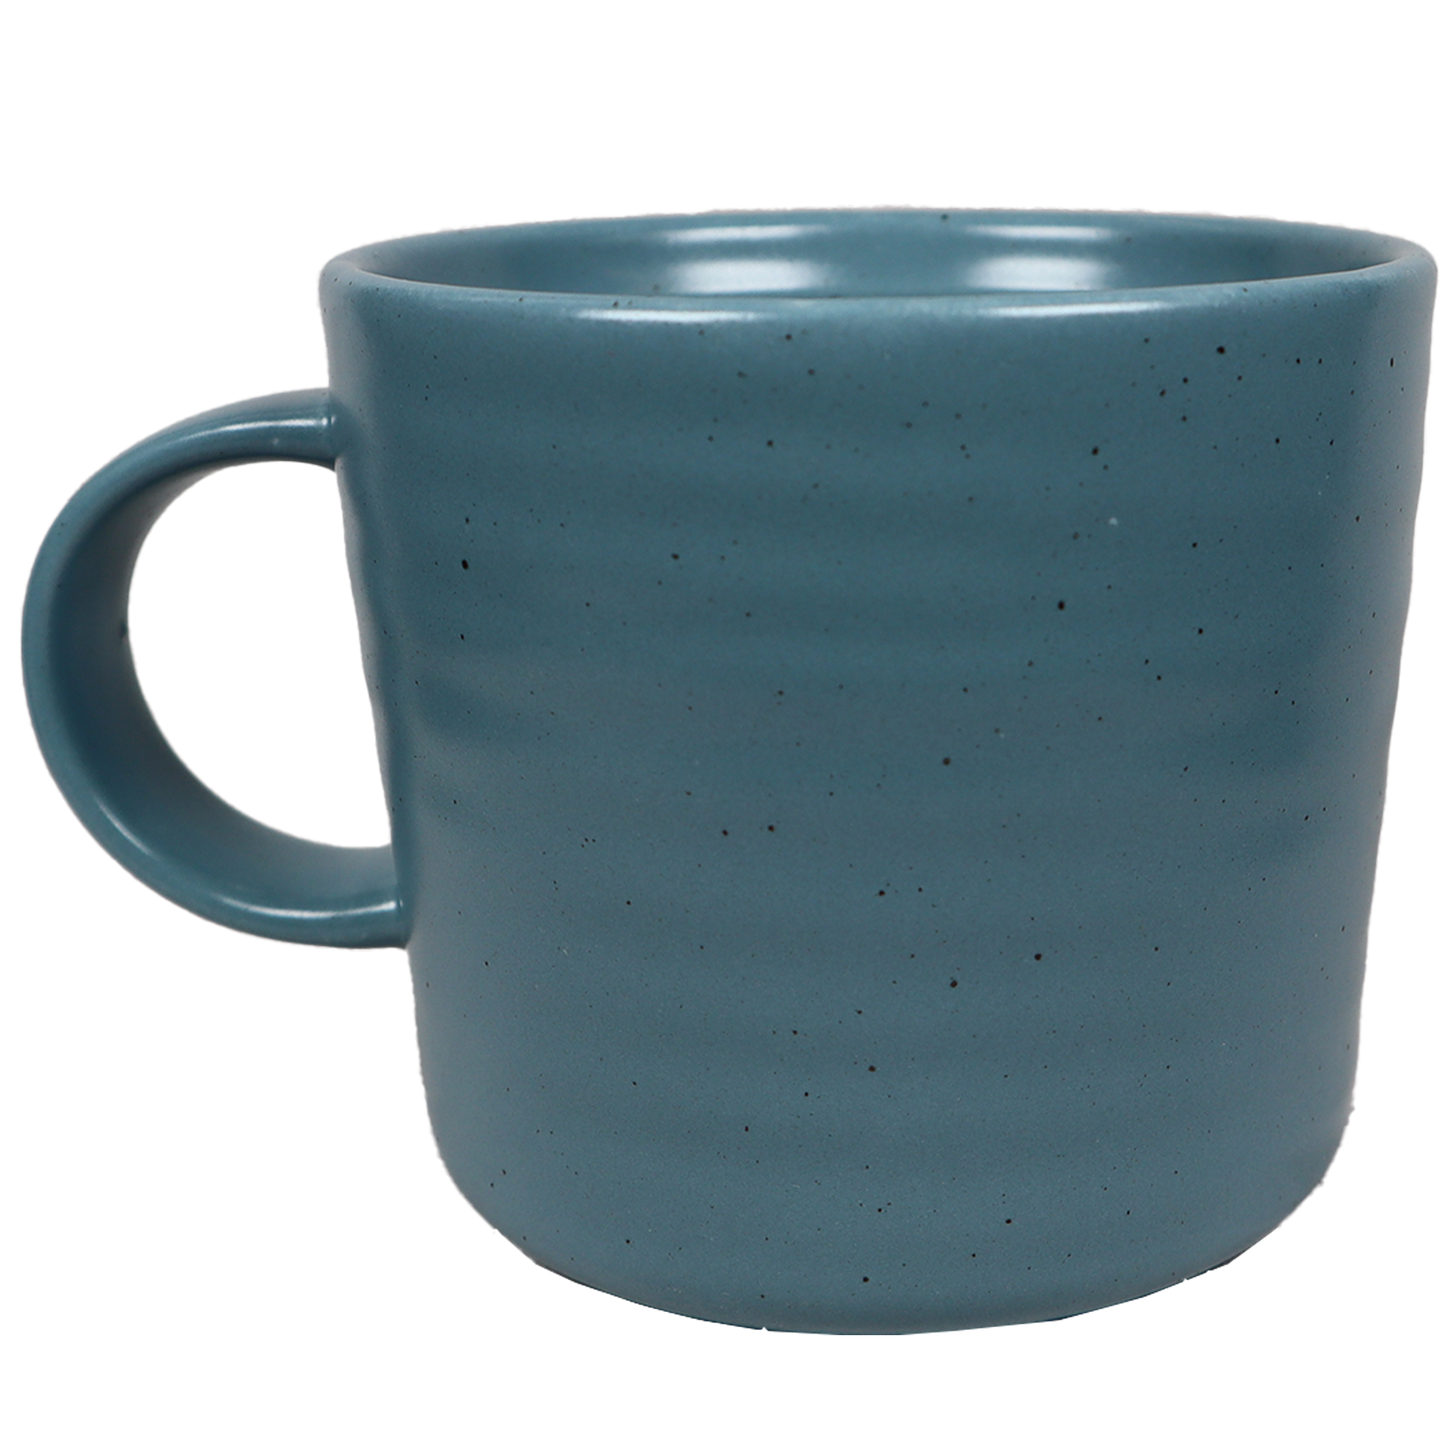 Terrain Mug, Slate Blue